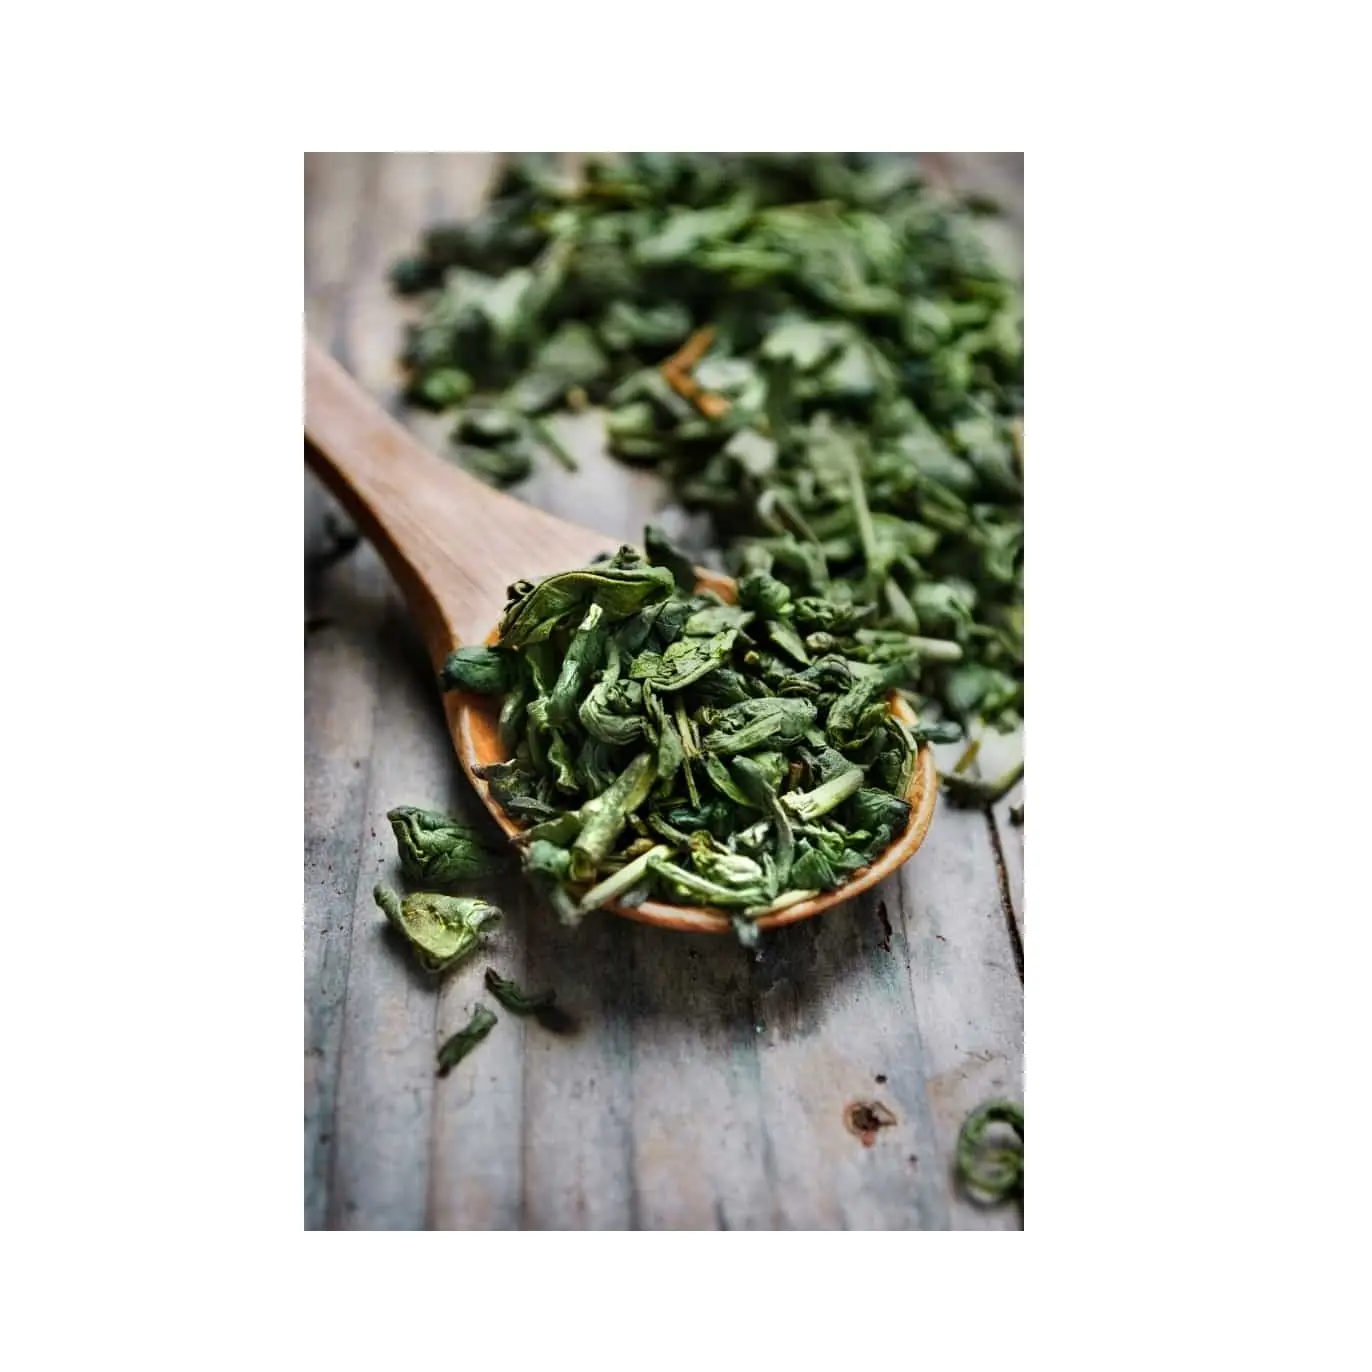 100% Organic Green Tea Wholesale Bulk Broken Green Tea Manufacturer and Exporter From India